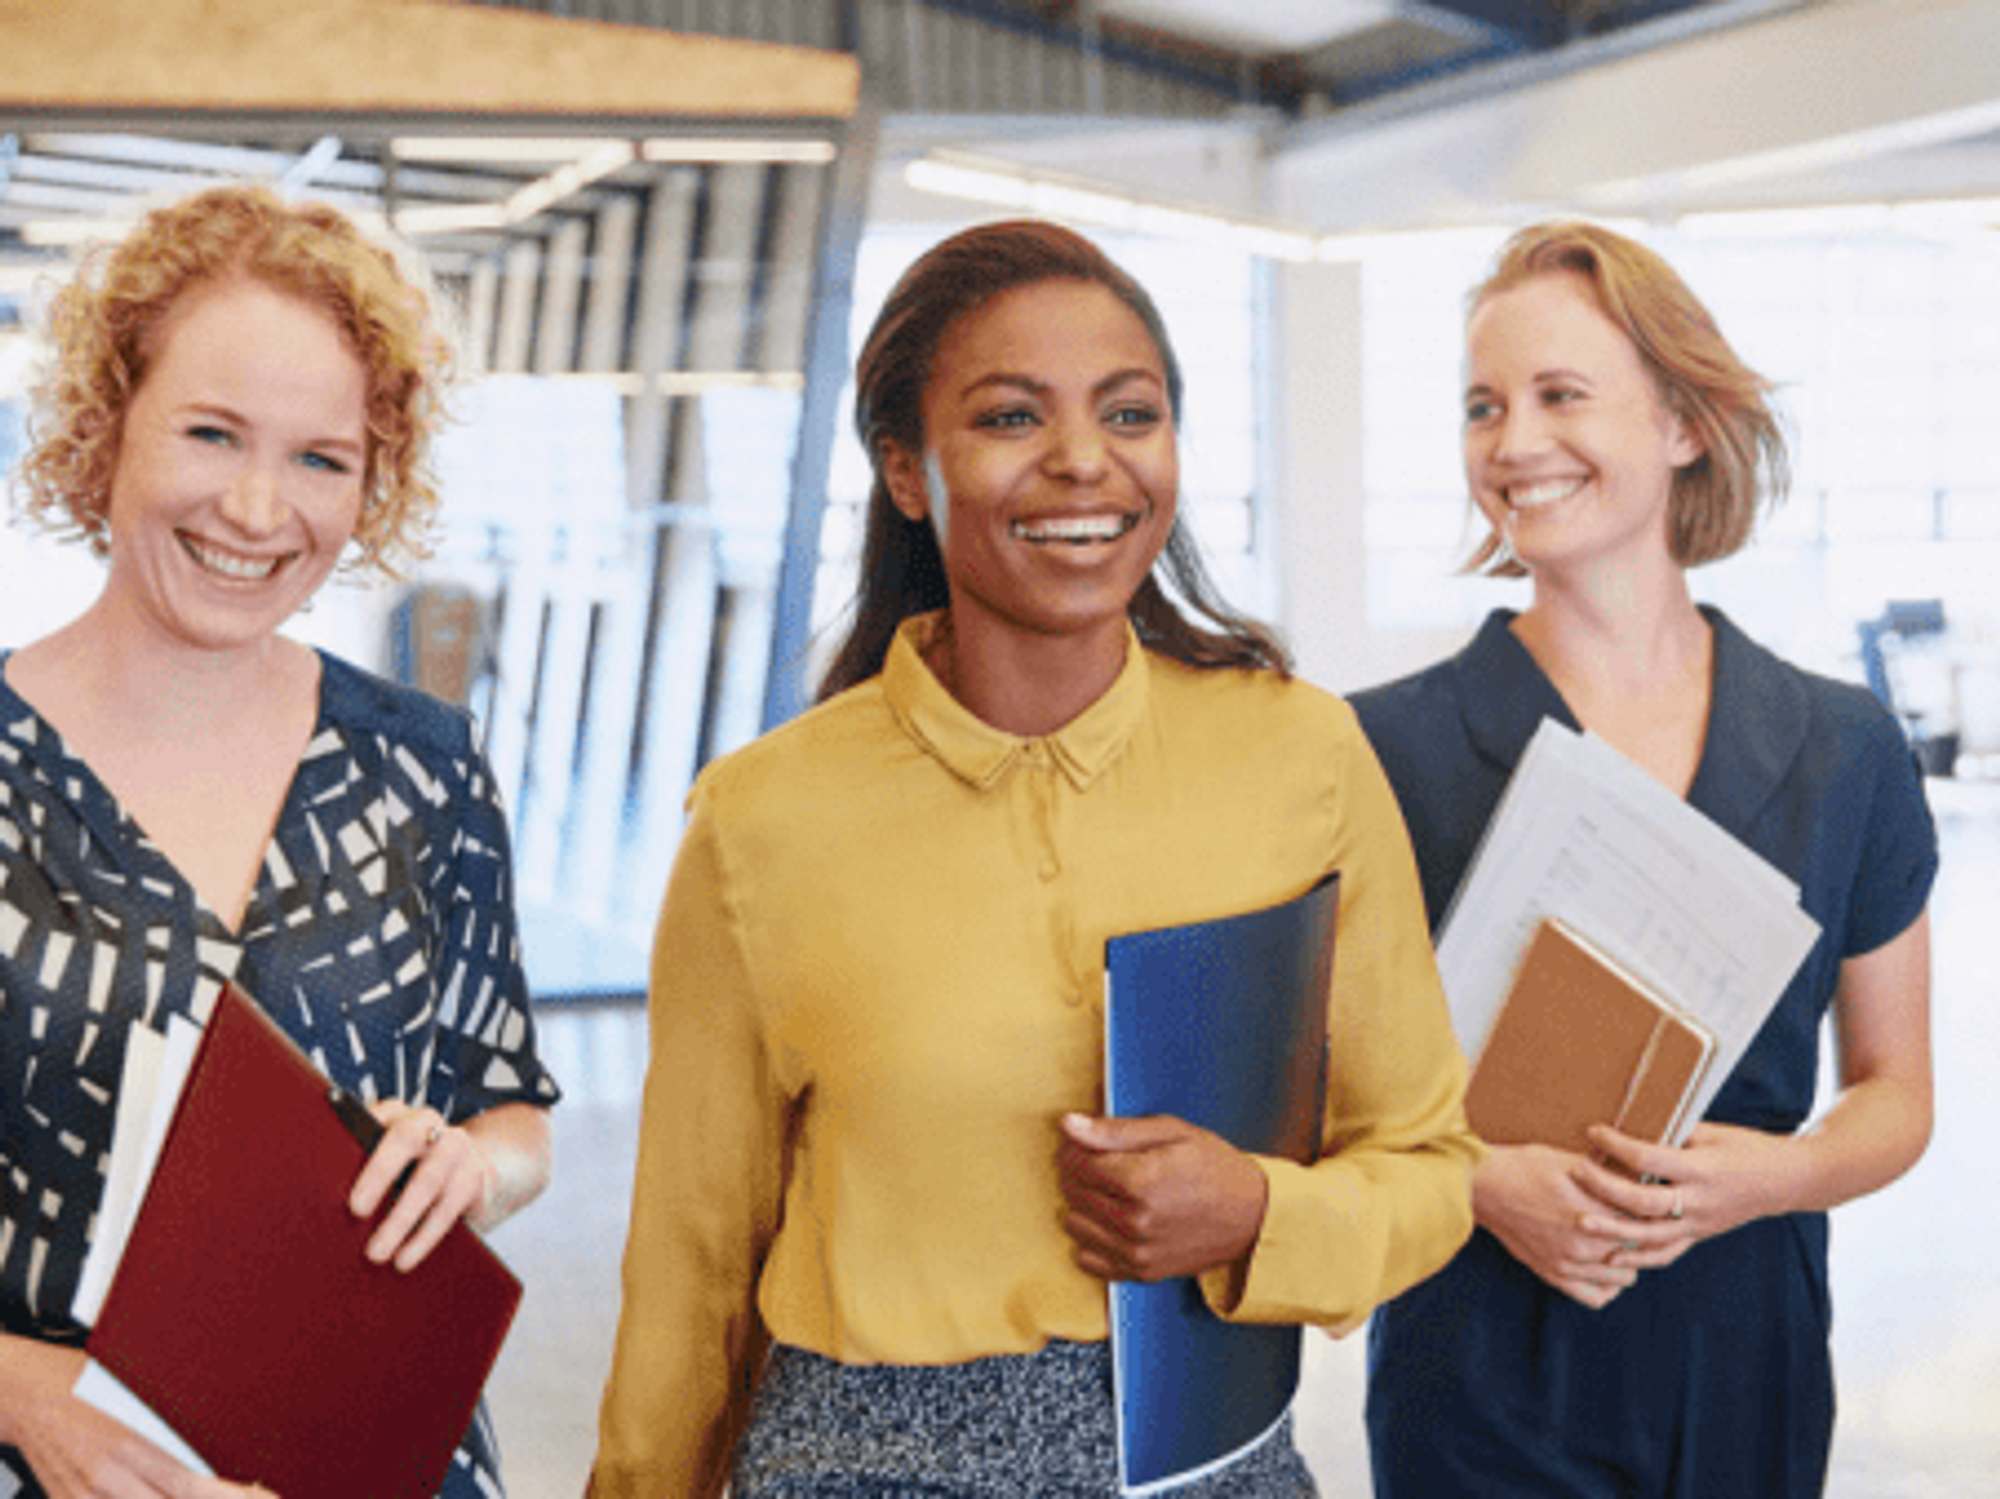 Women at office, entrepreneur, work, business